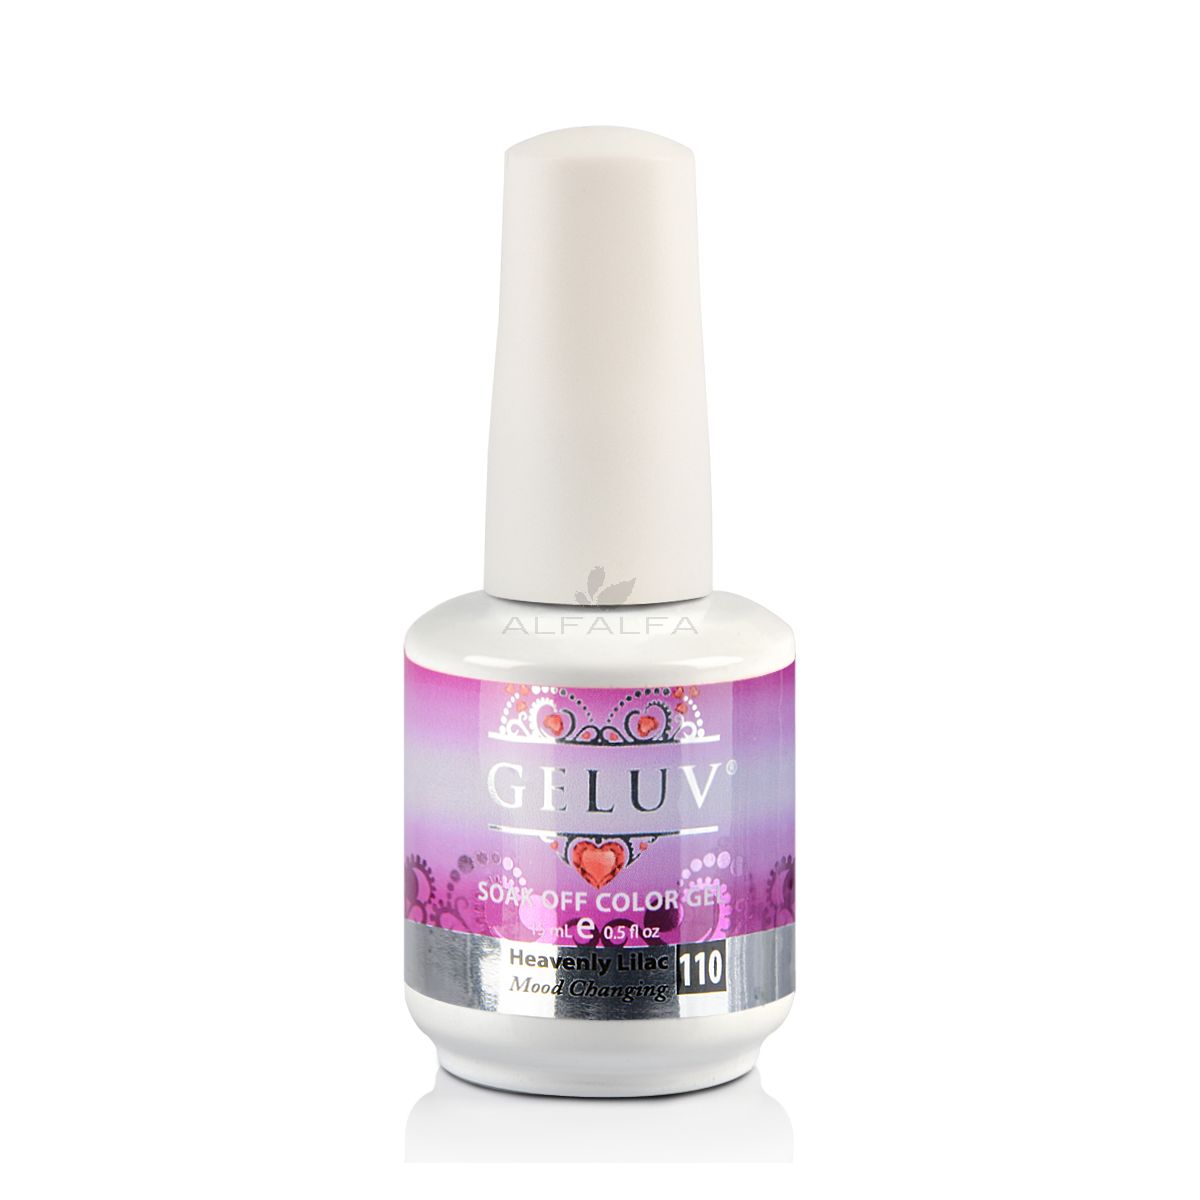 Geluv #110 Heavenly Lilac - Mood Changing 0.5 oz